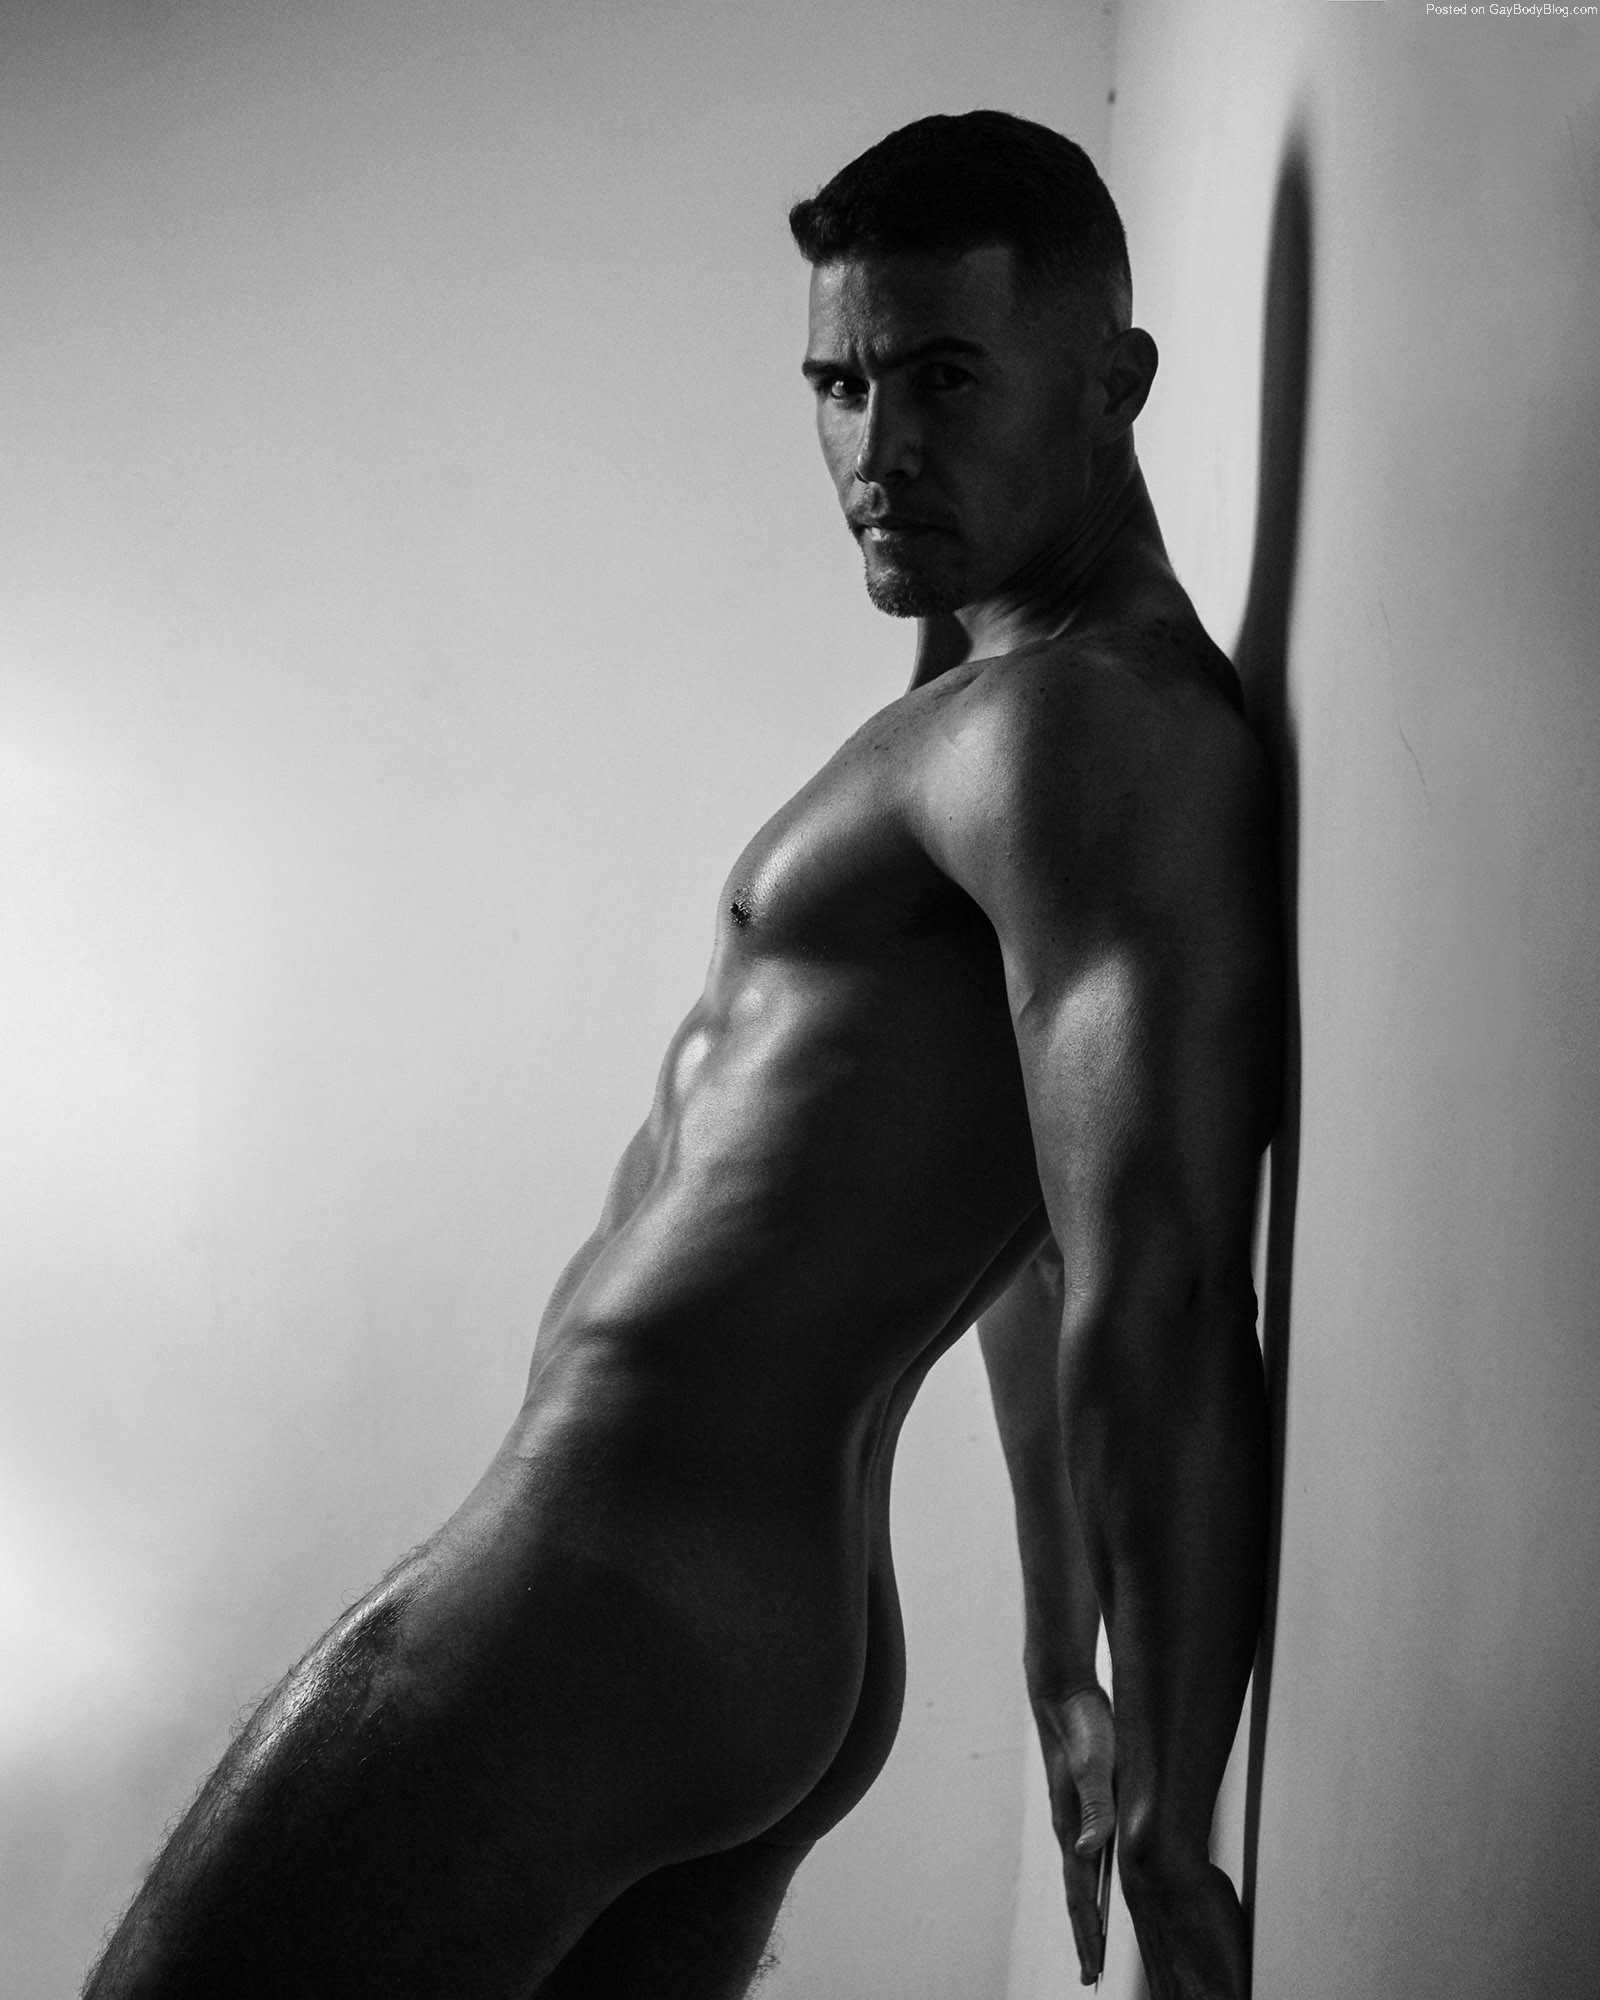 Admiring The Butt Of Handsome Alejandro Mata | Daily Dudes @ Dude Dump